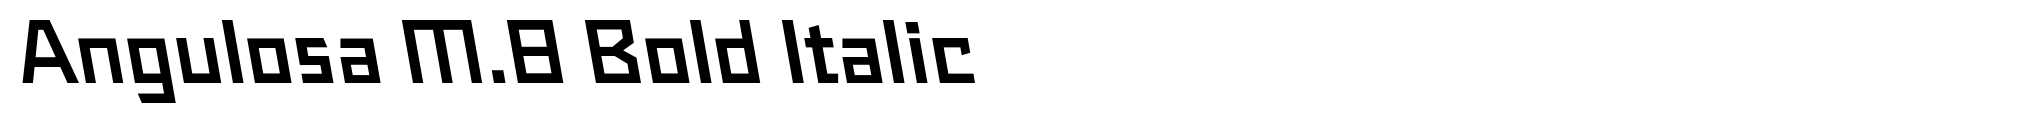 Angulosa M.8 Bold Italic image